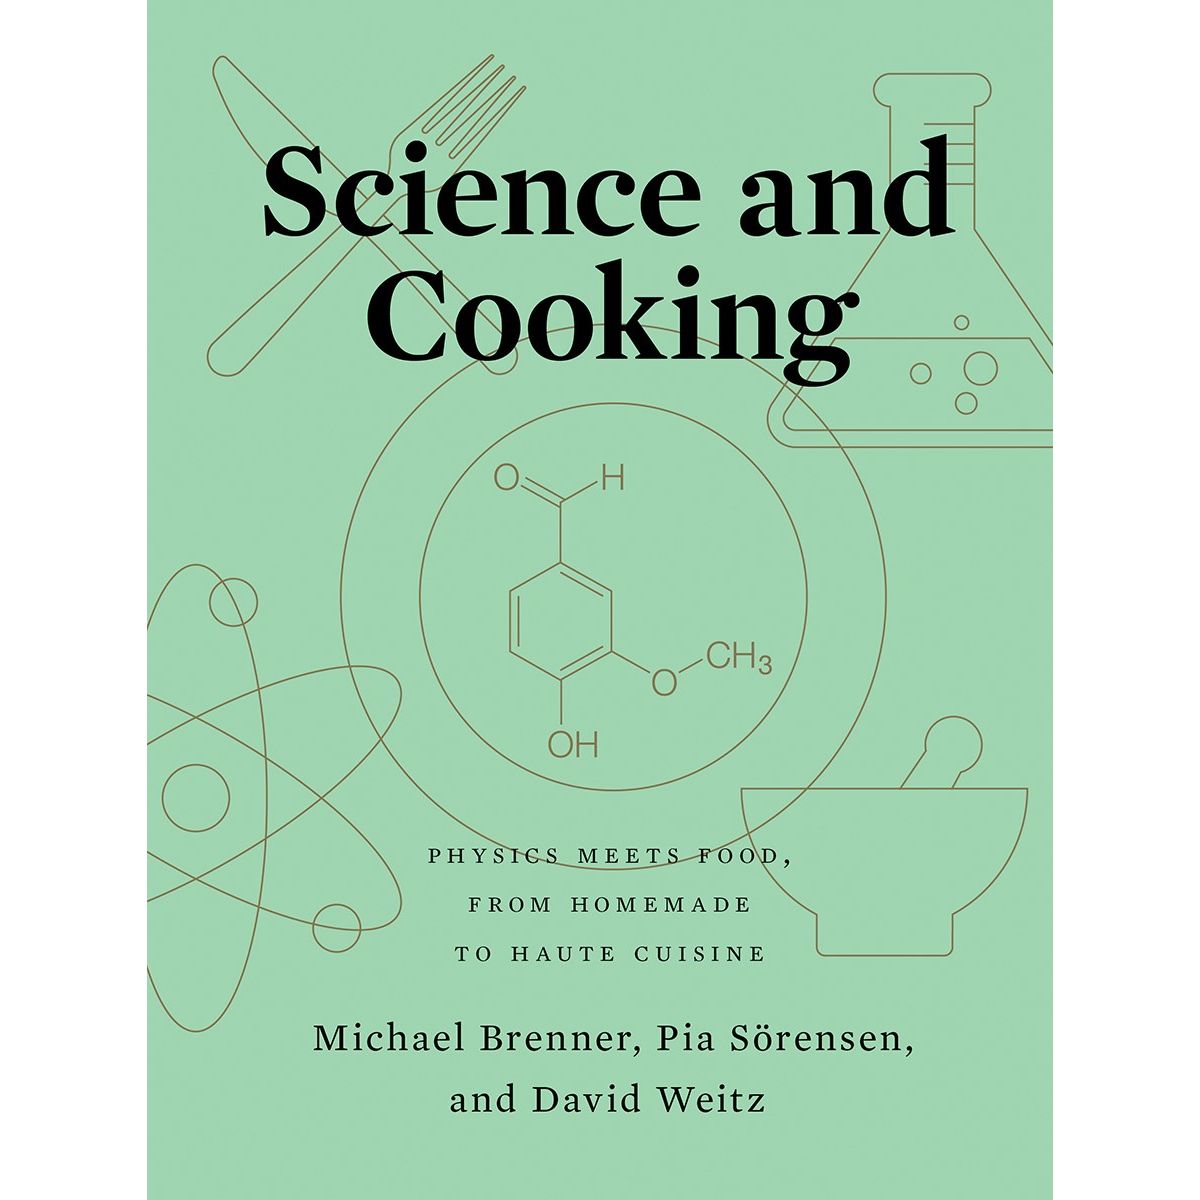 Science and Cooking (Michael Brenner, Pia Sörensen, David Weitz)